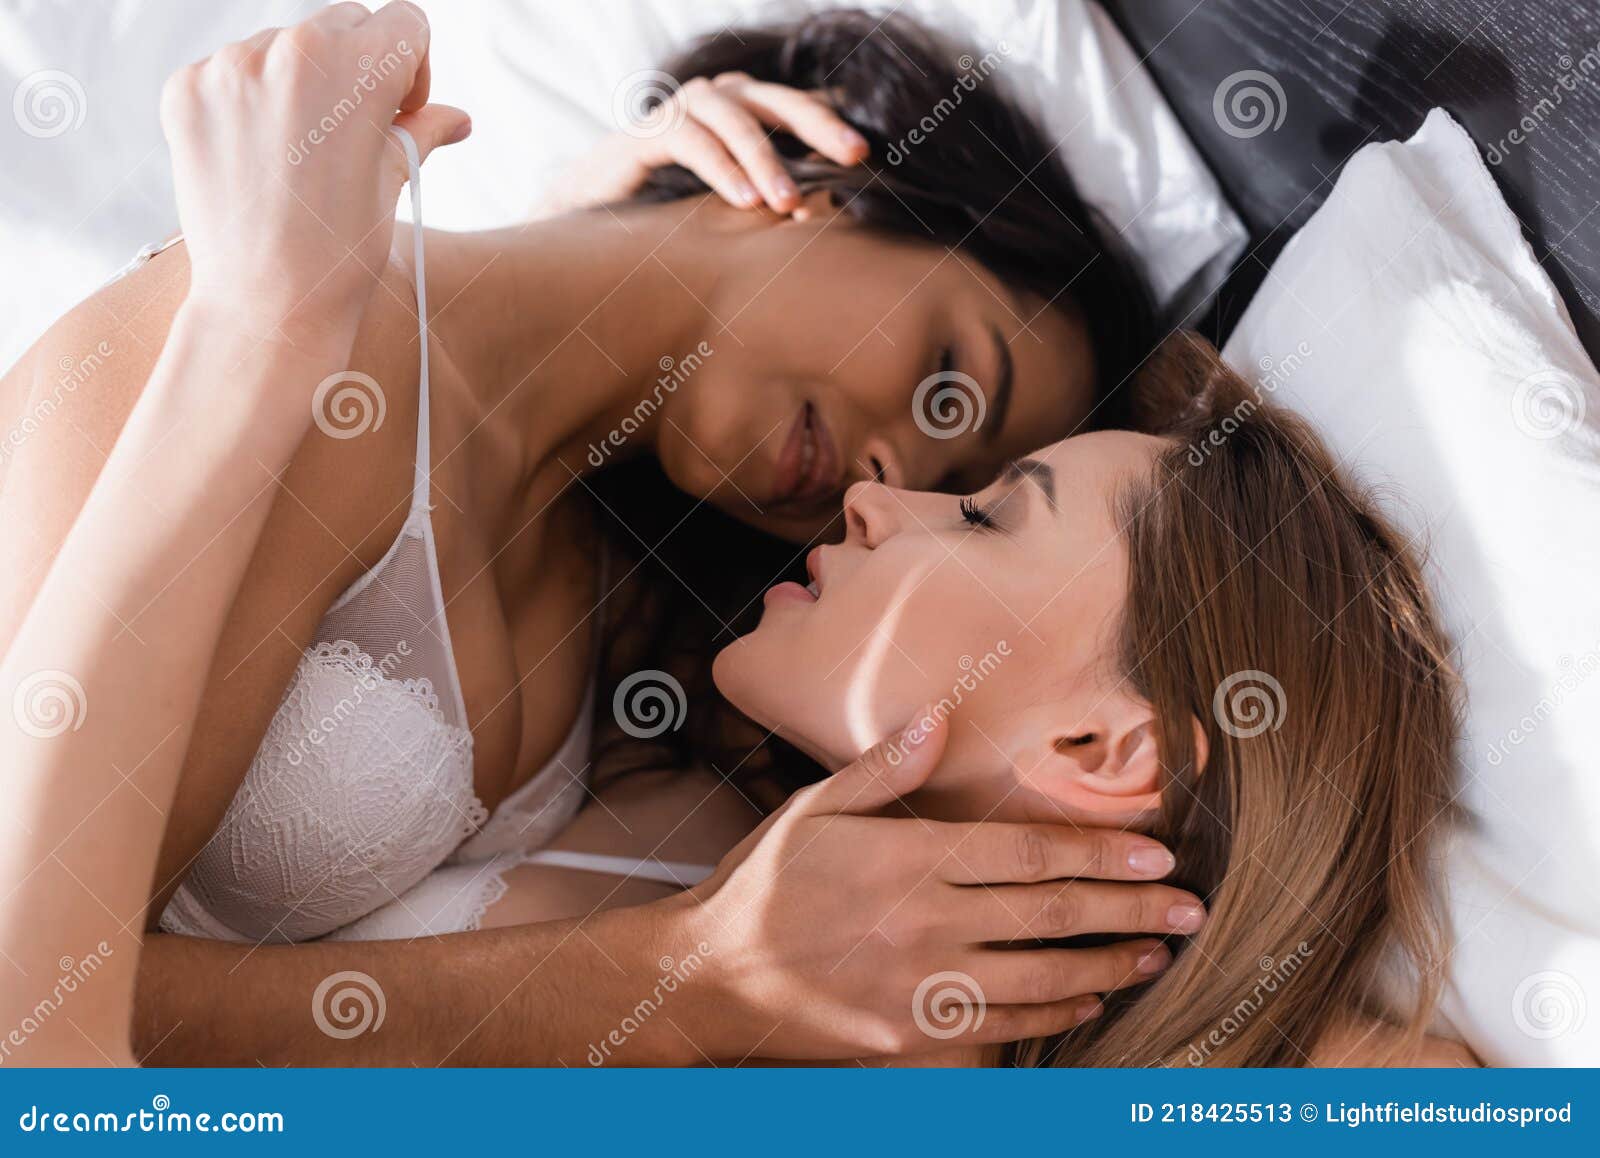 brian oslund add photo two women making love